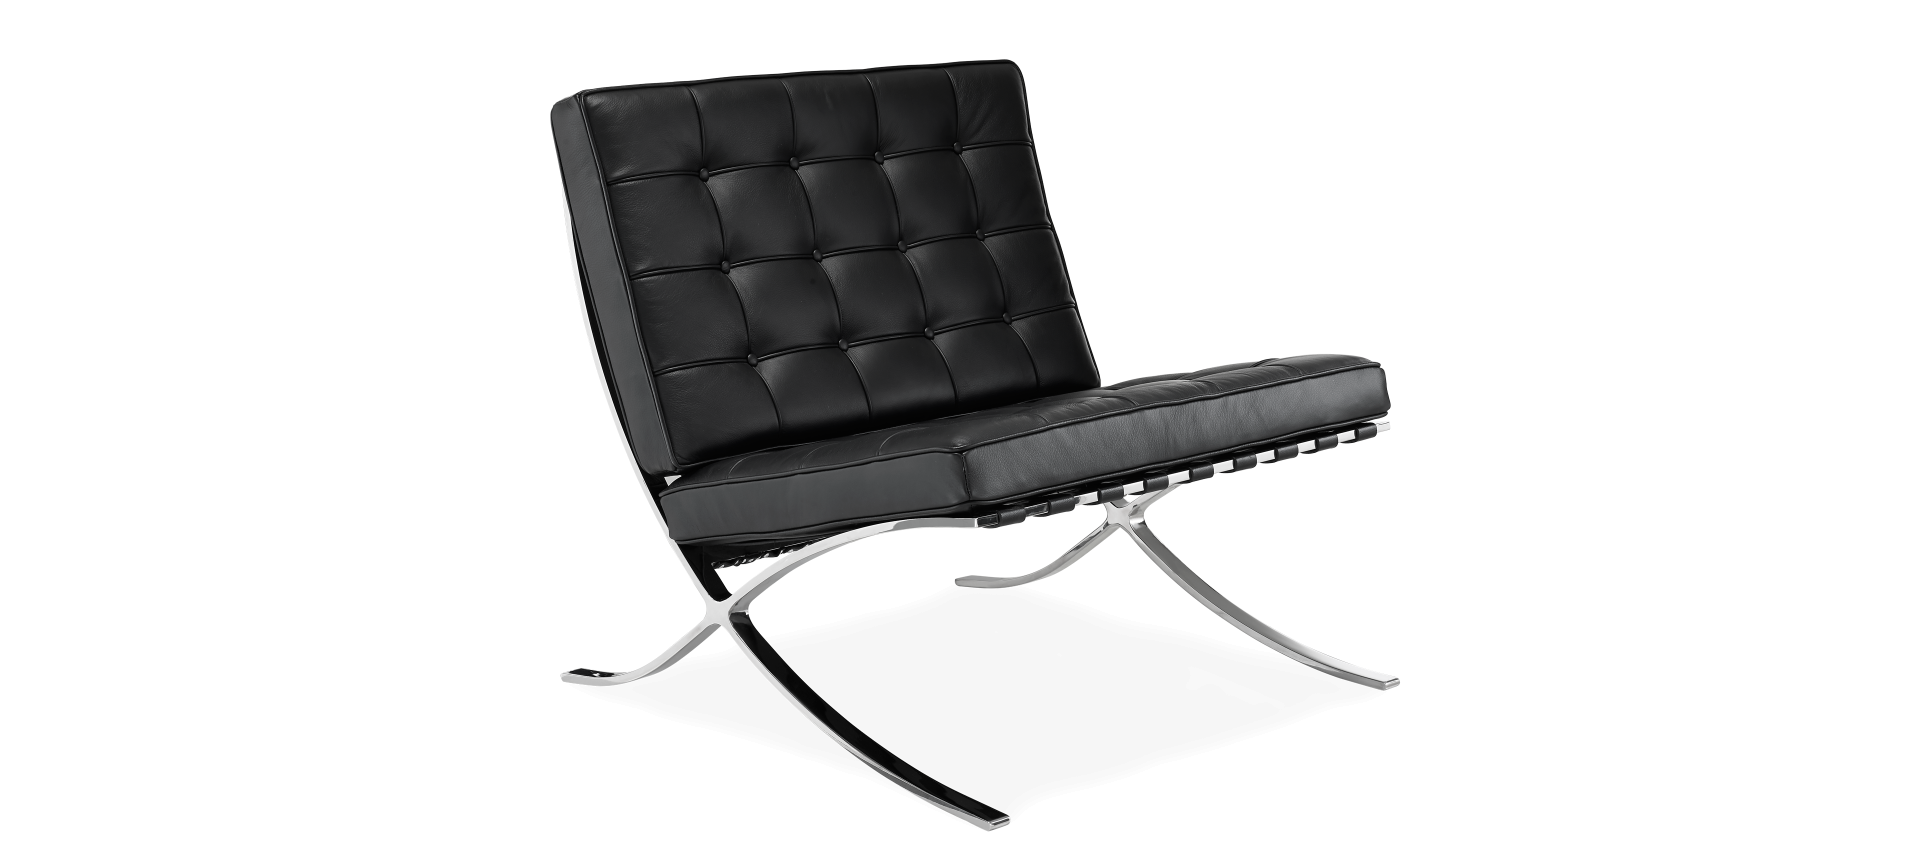 Barcelona Chair Black Standard Leather, Barcelona Leather Chair